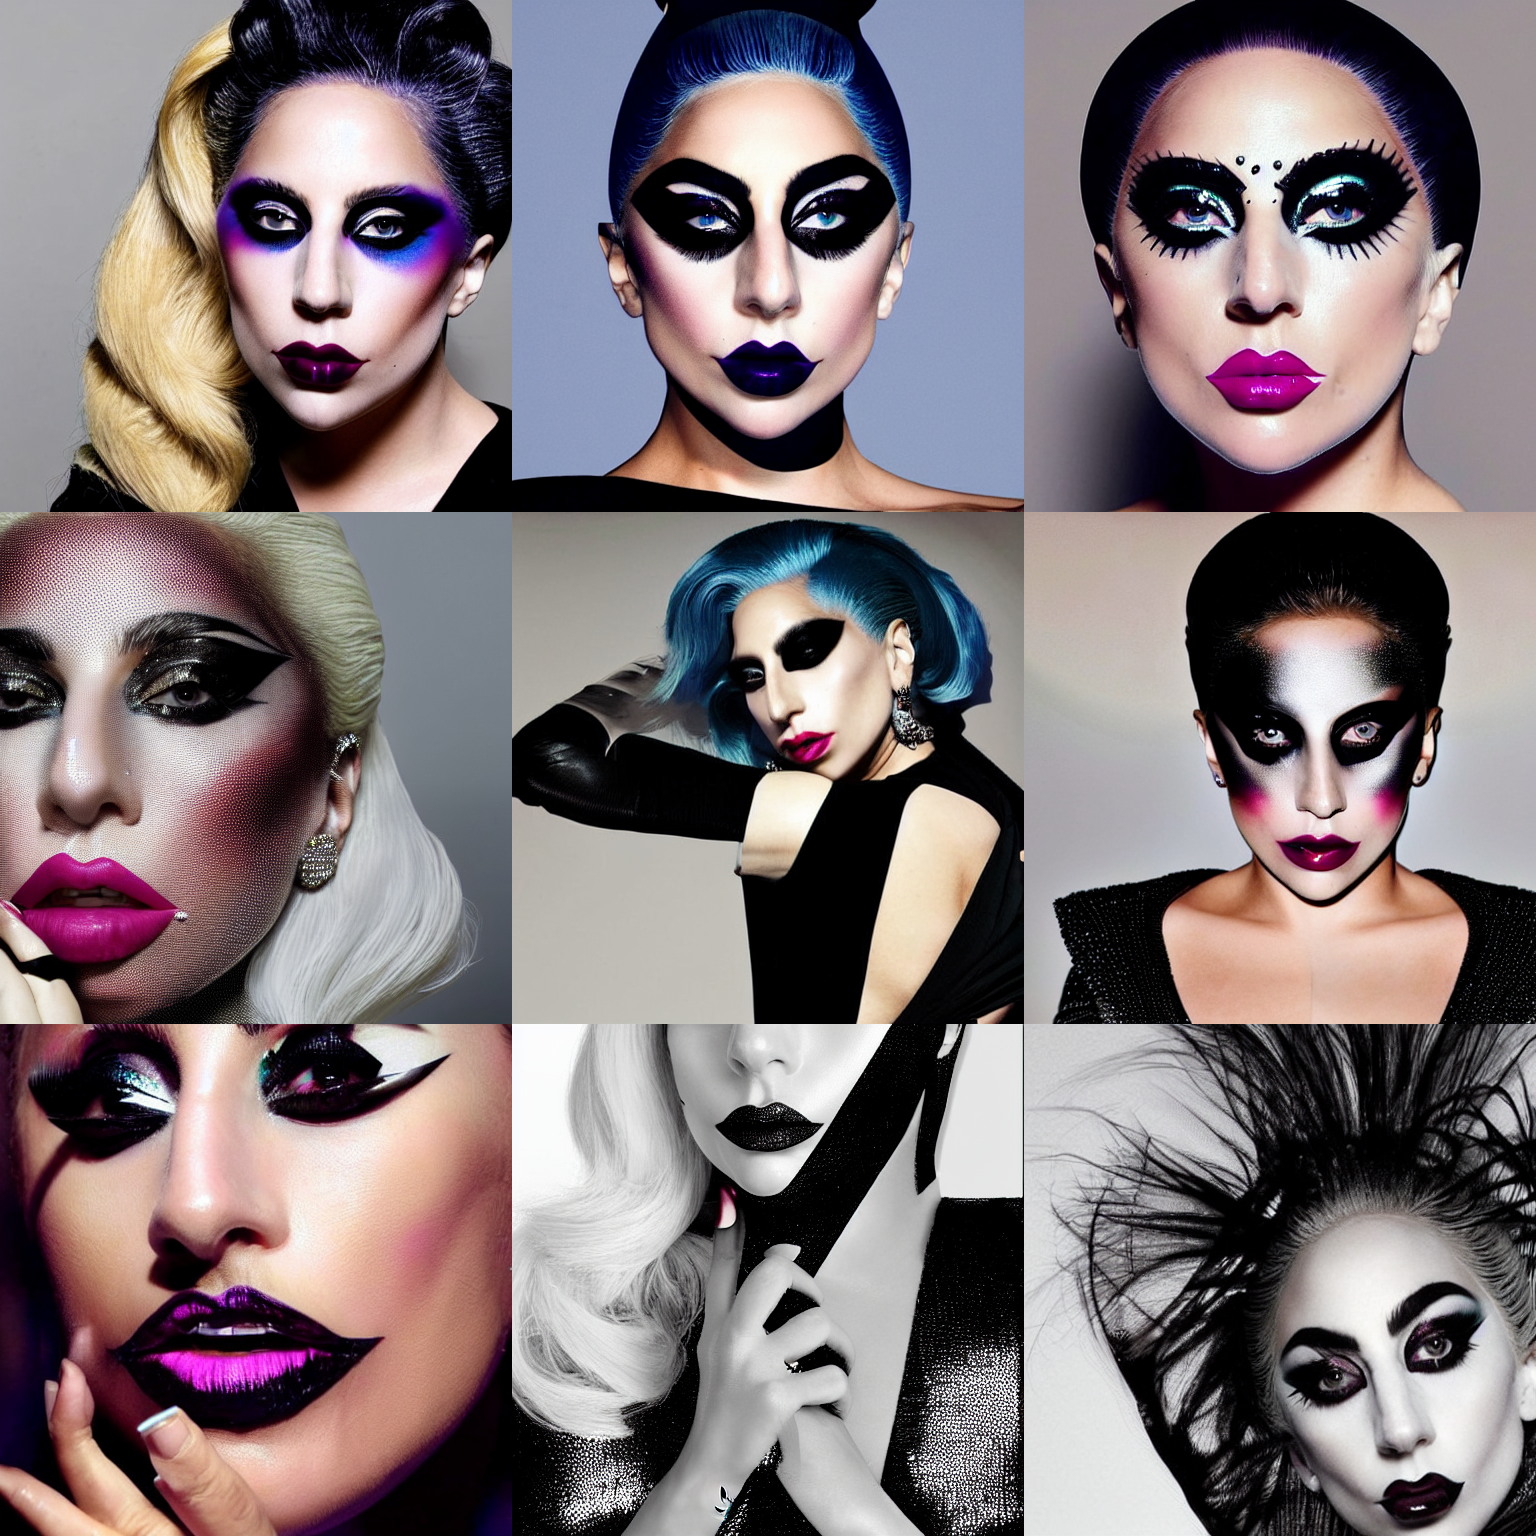 Lady Gaga posing for a makeup shoot wearing geometric makeup, dramatic lighting